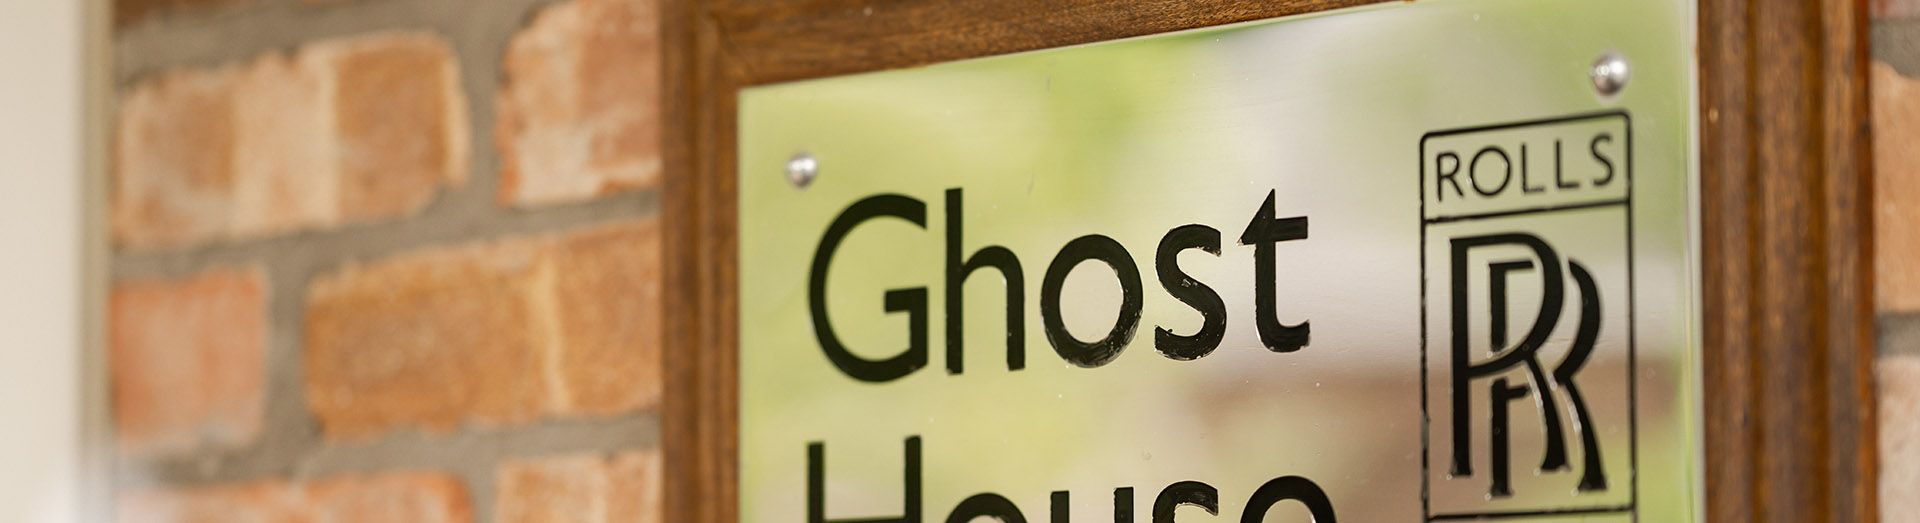 Ghost-House-Desktop-3